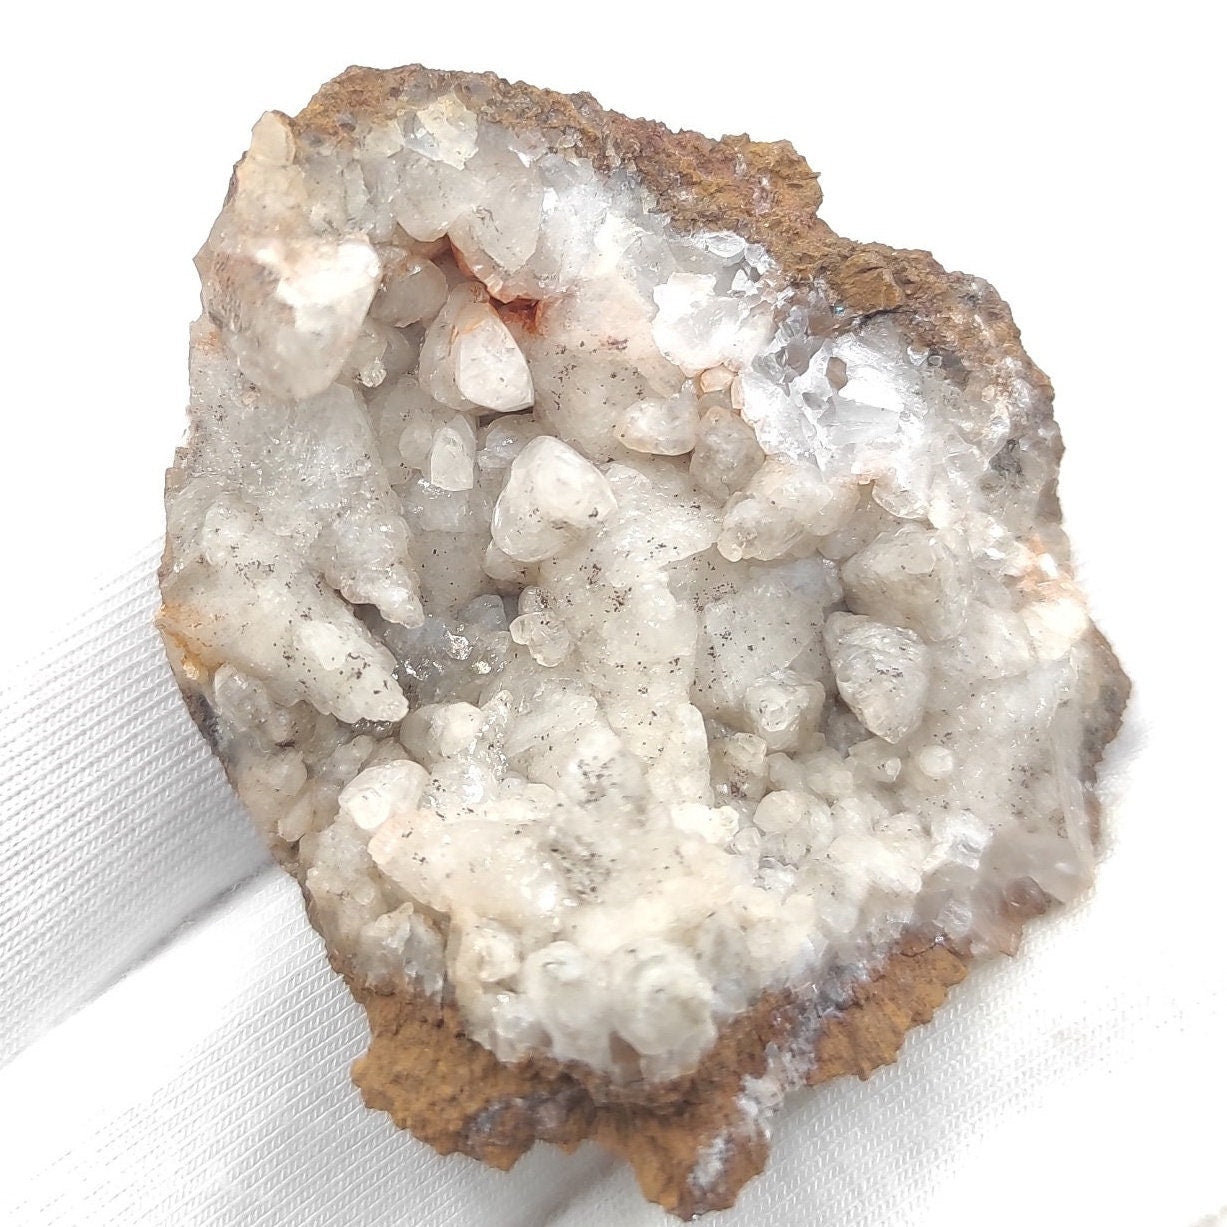 22g UV Reactive Calcite - Phosphorescent Calcite Specimen - Cambridge Cove, Nova Scotia, Canada - UV Minerals - Minerals with Afterglow